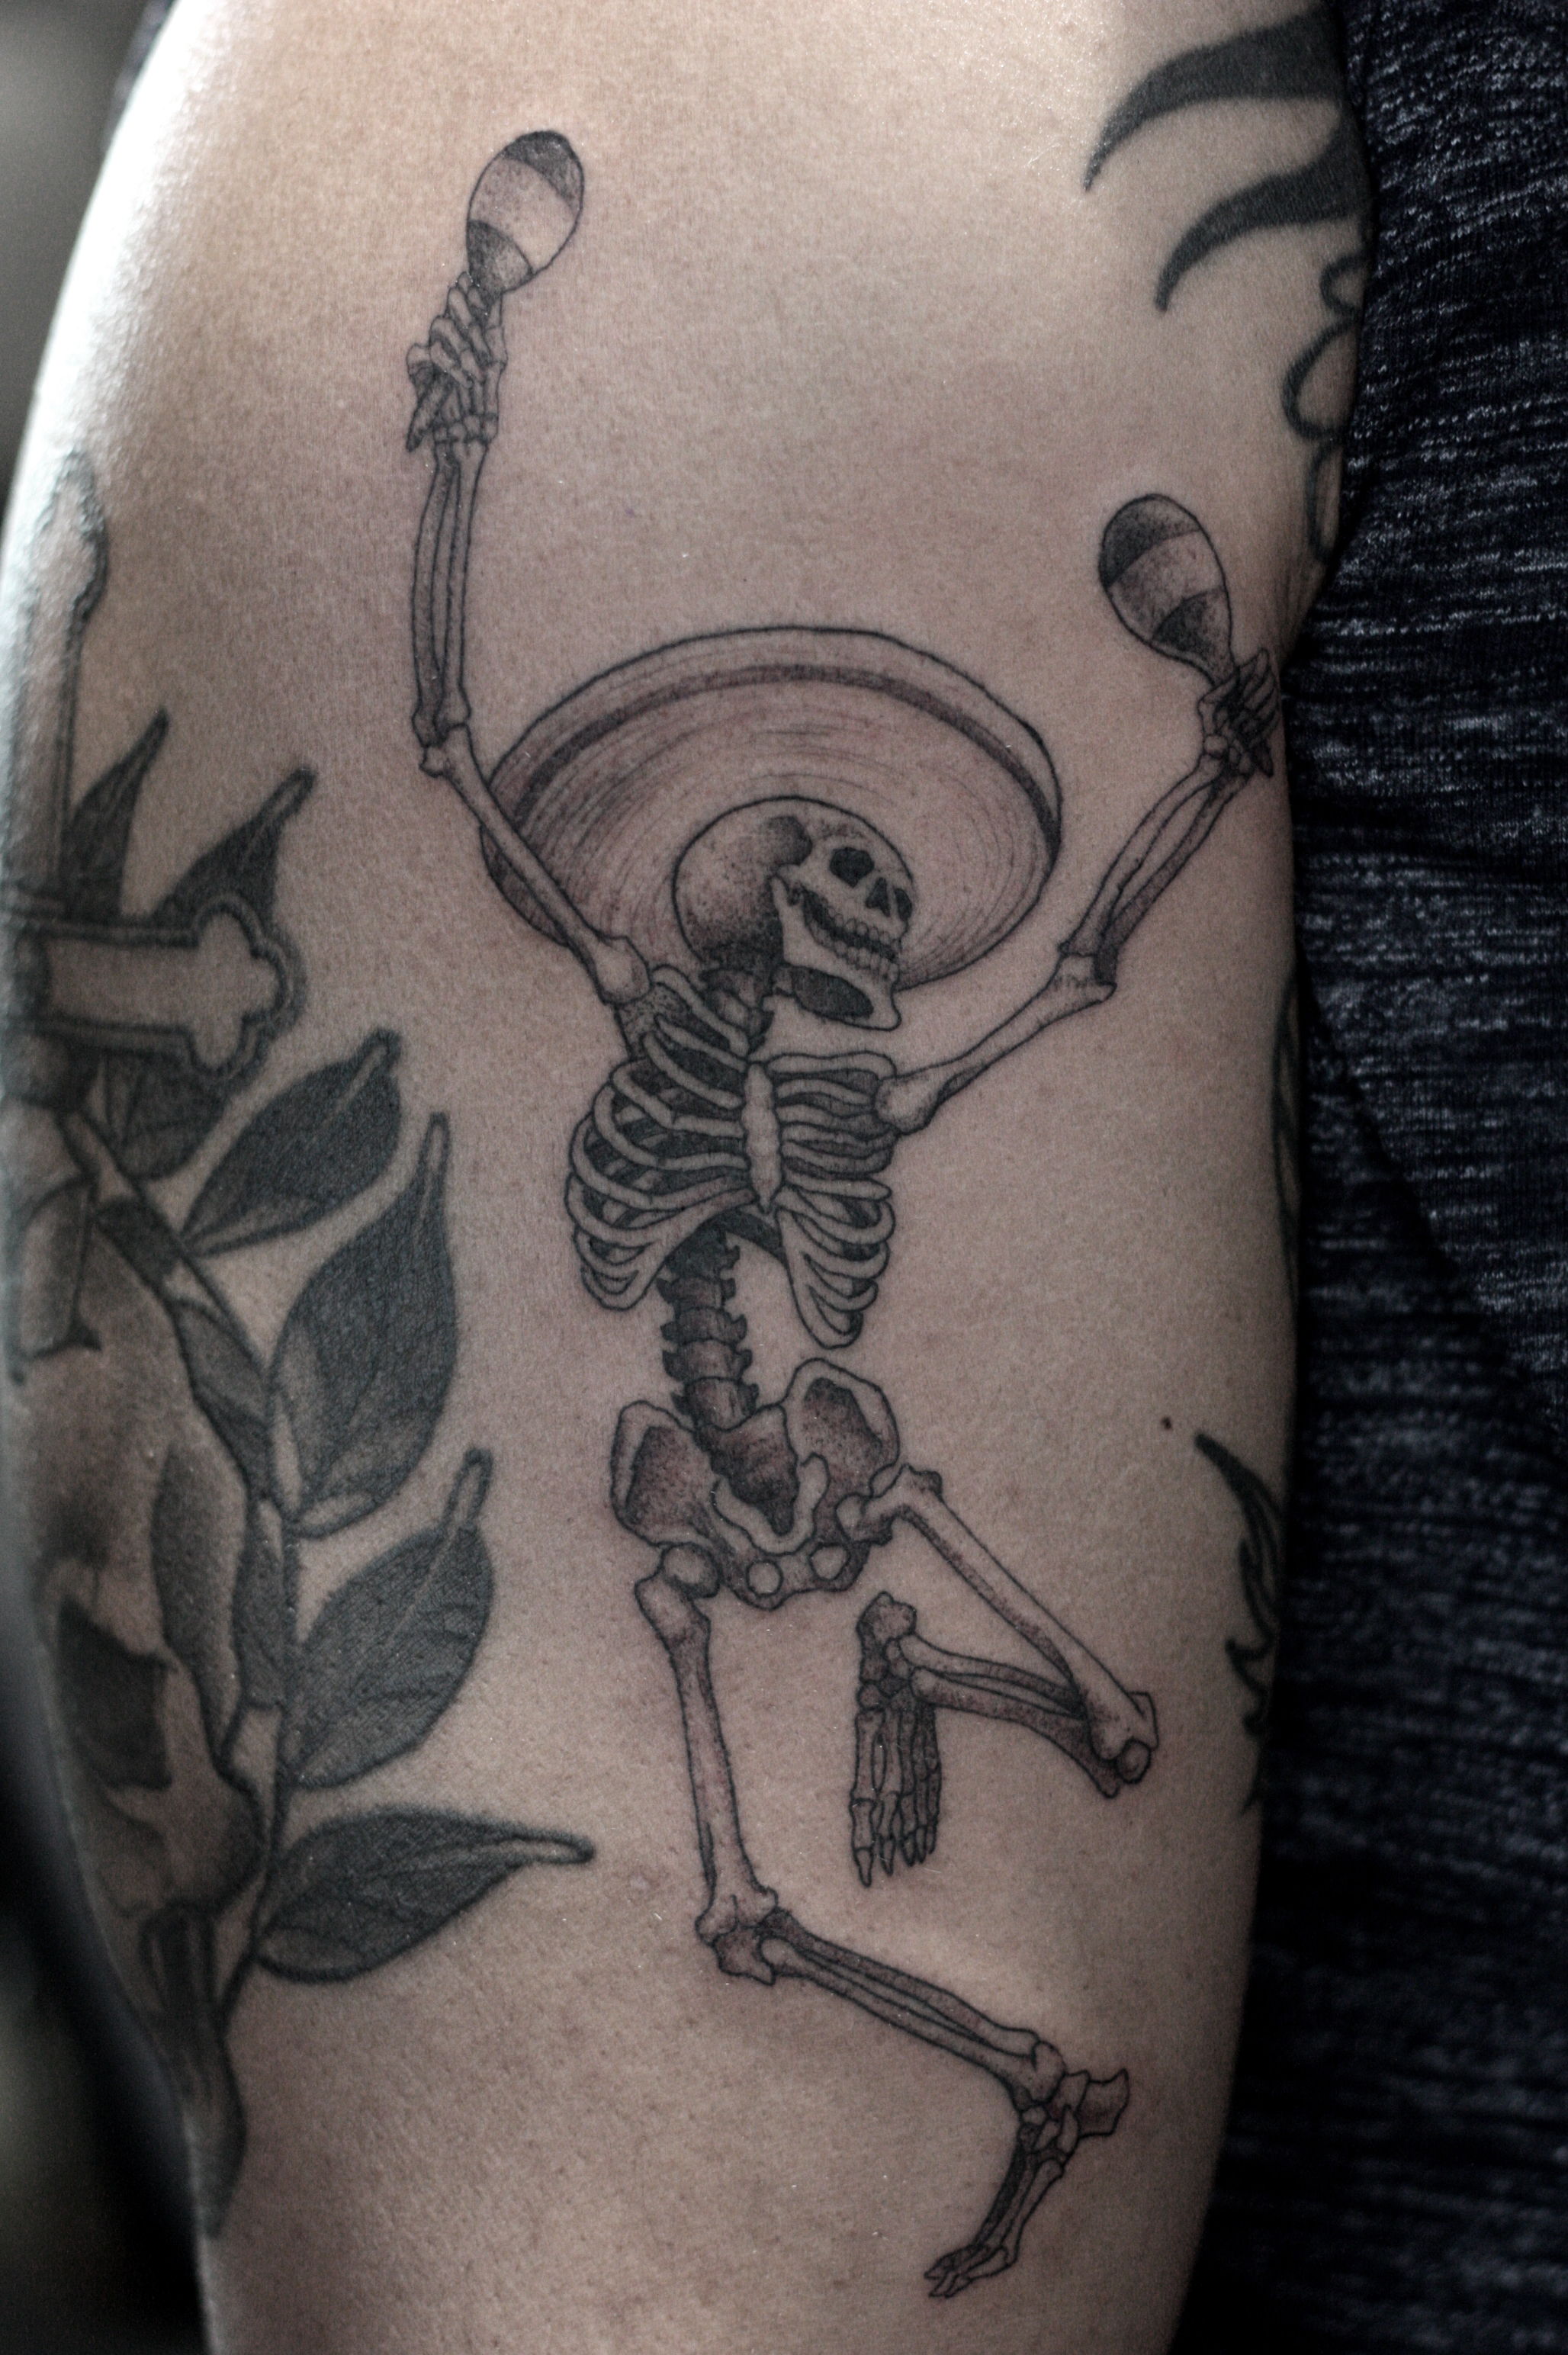  Dancing  Skeleton  Black Sword Tattoo  Parlour